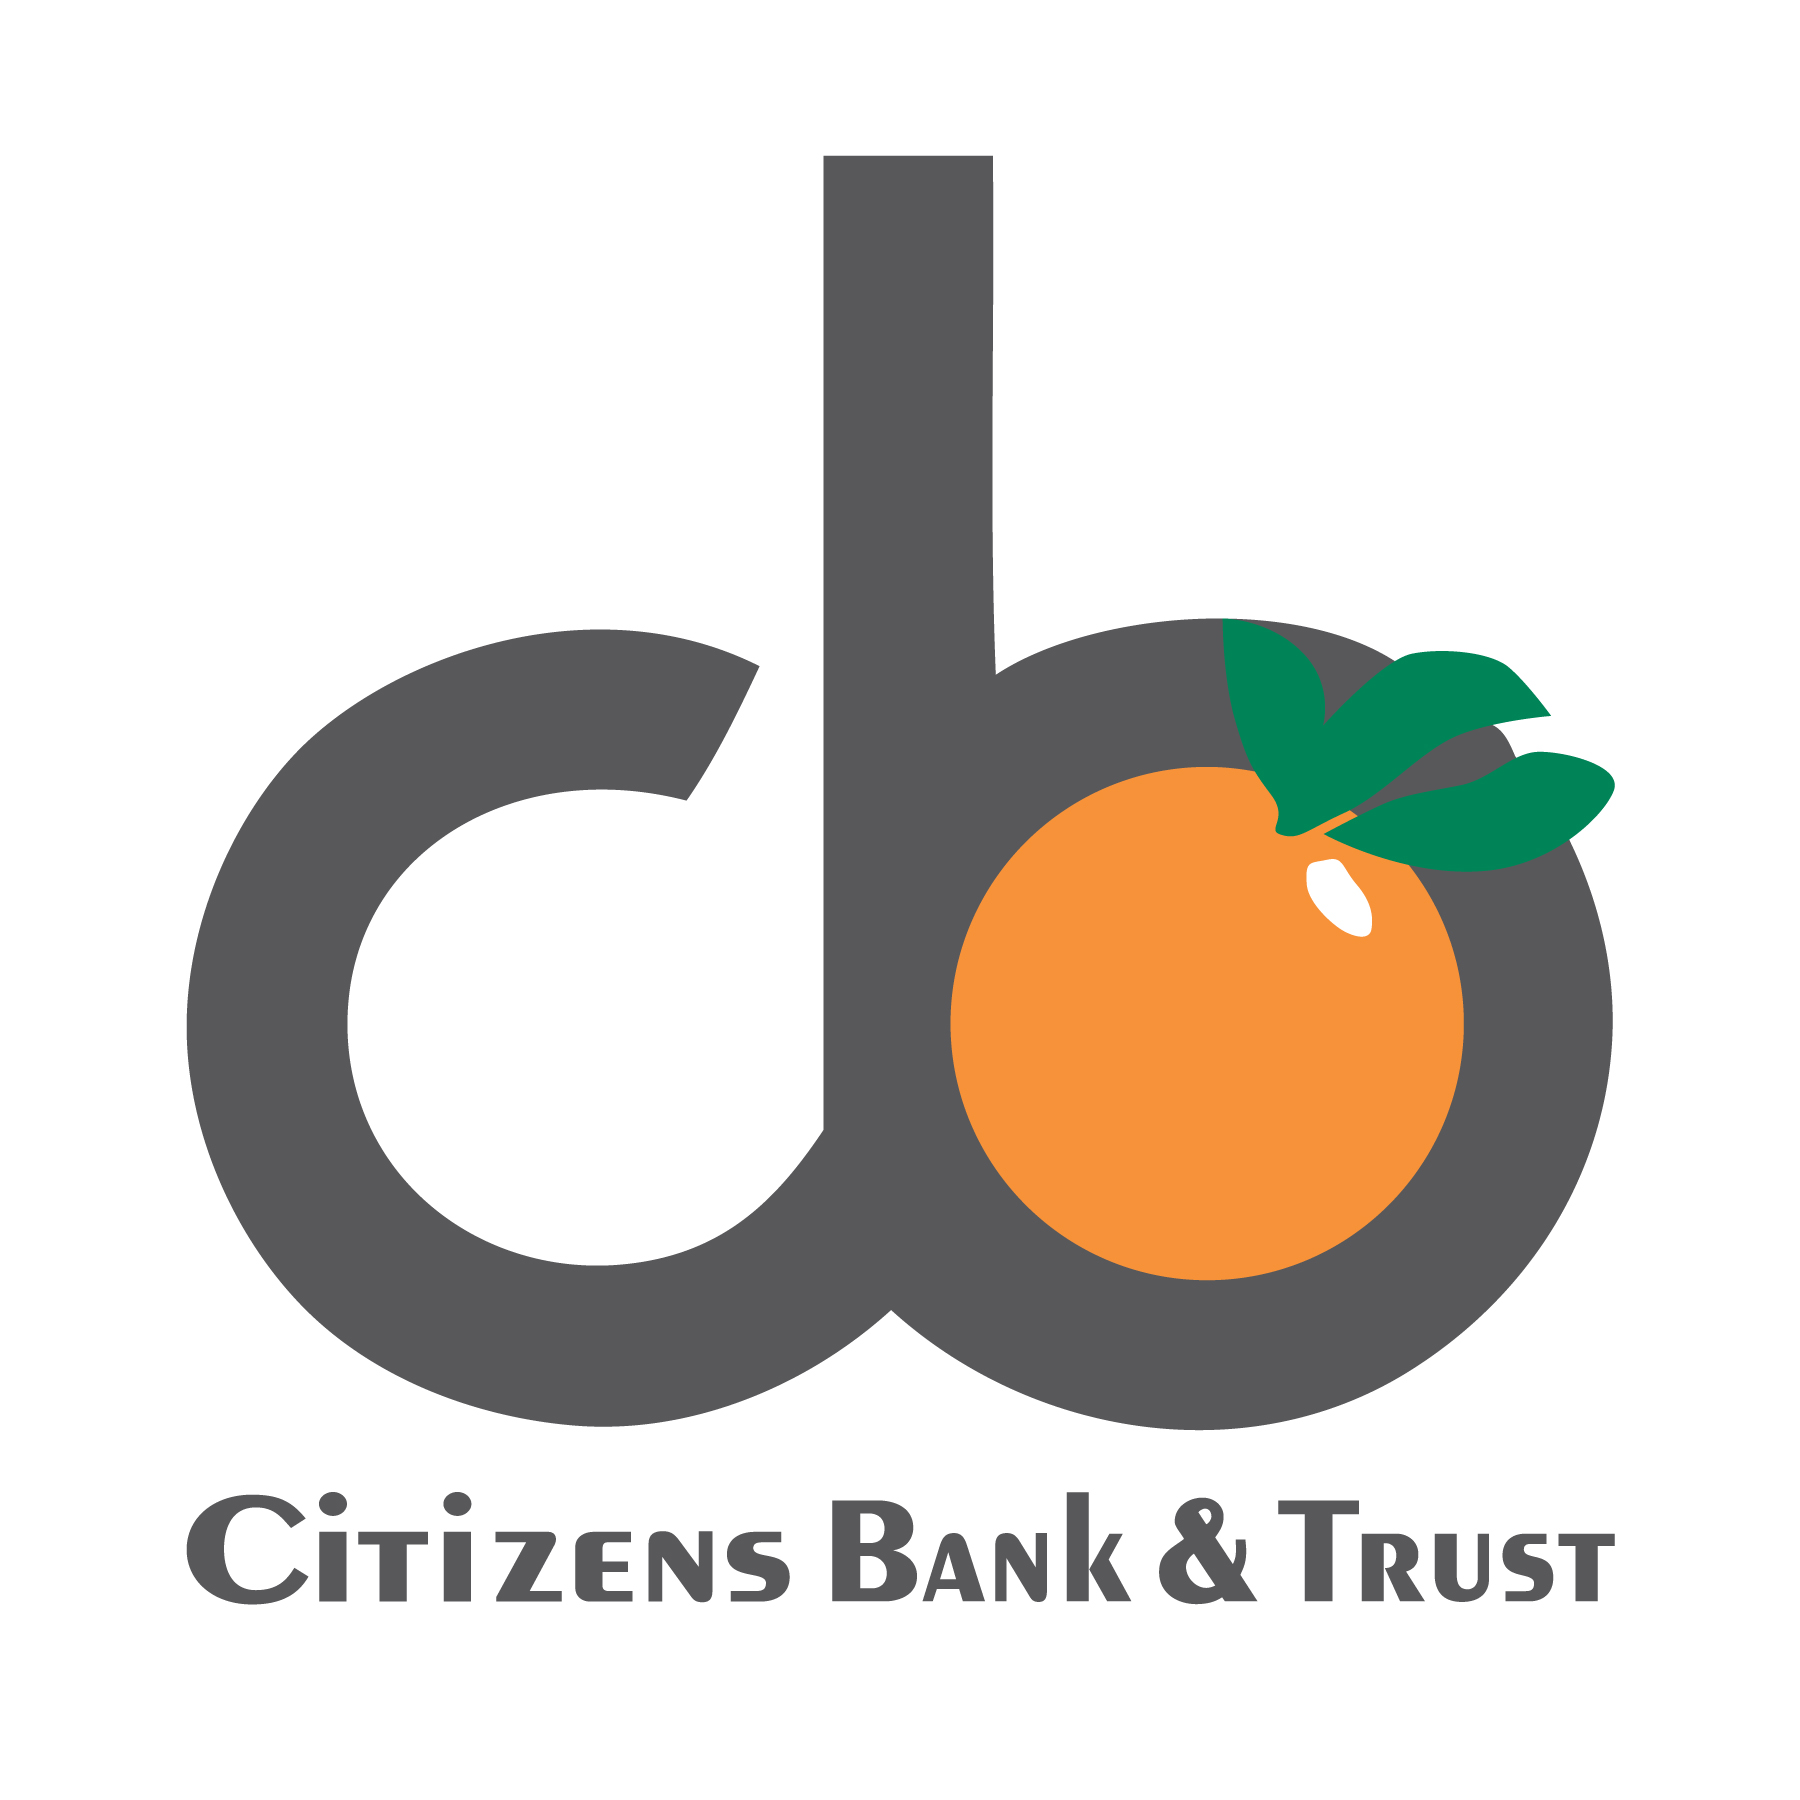 Citizens Bank & Trust (Tier 4)